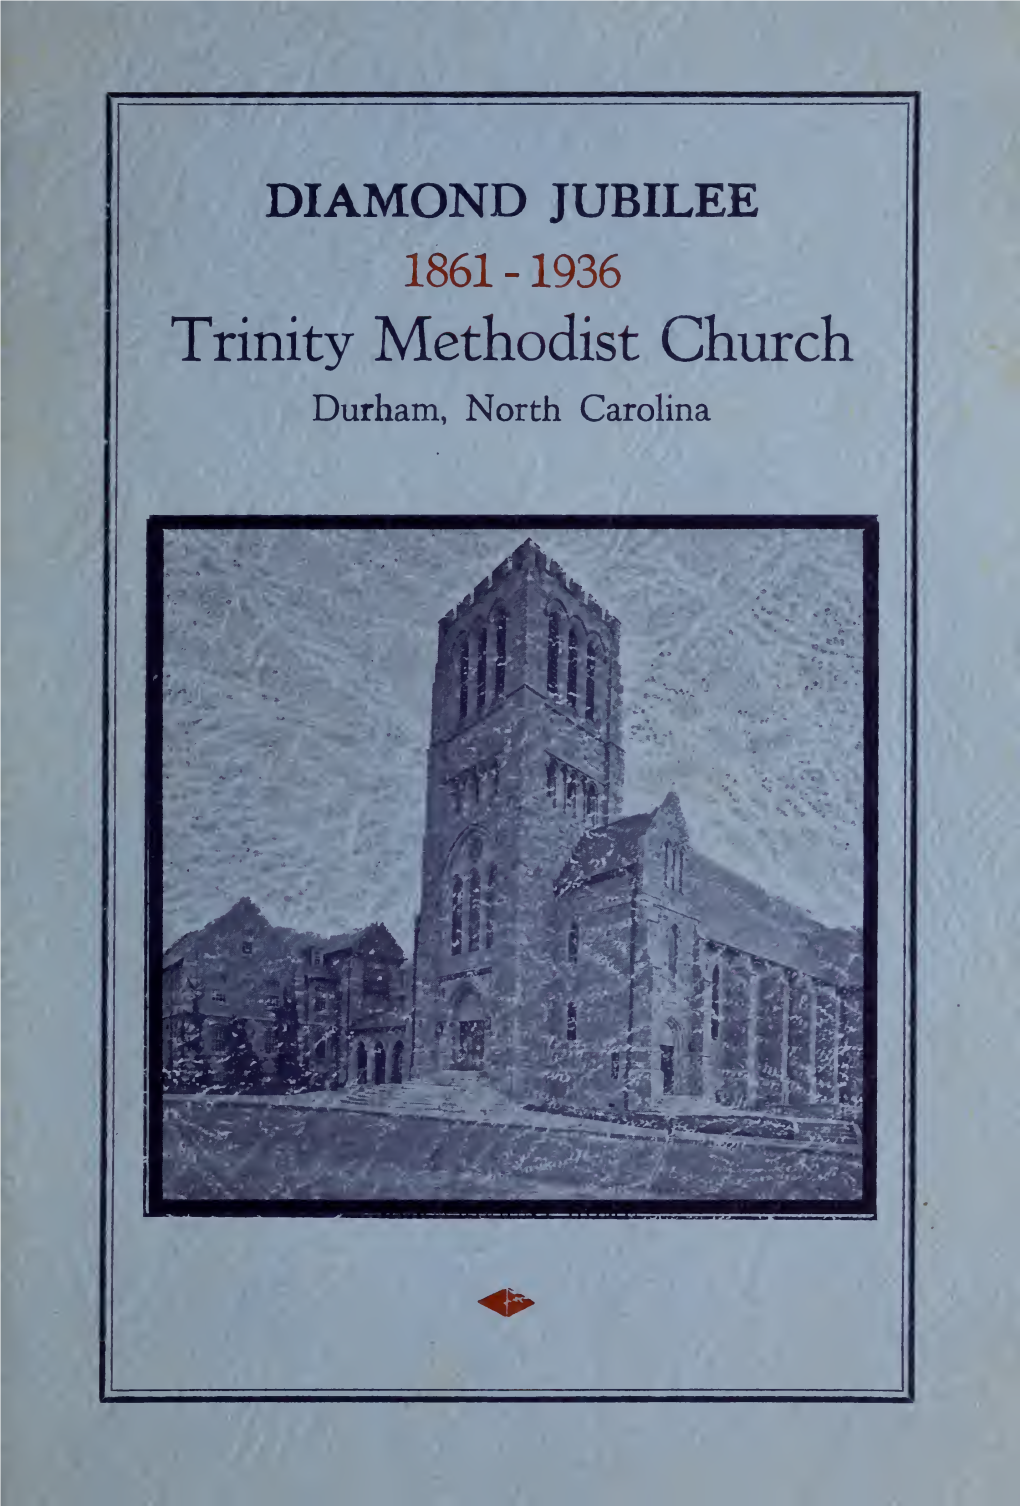 Diamond Jubilee of Trinity Methodist Church